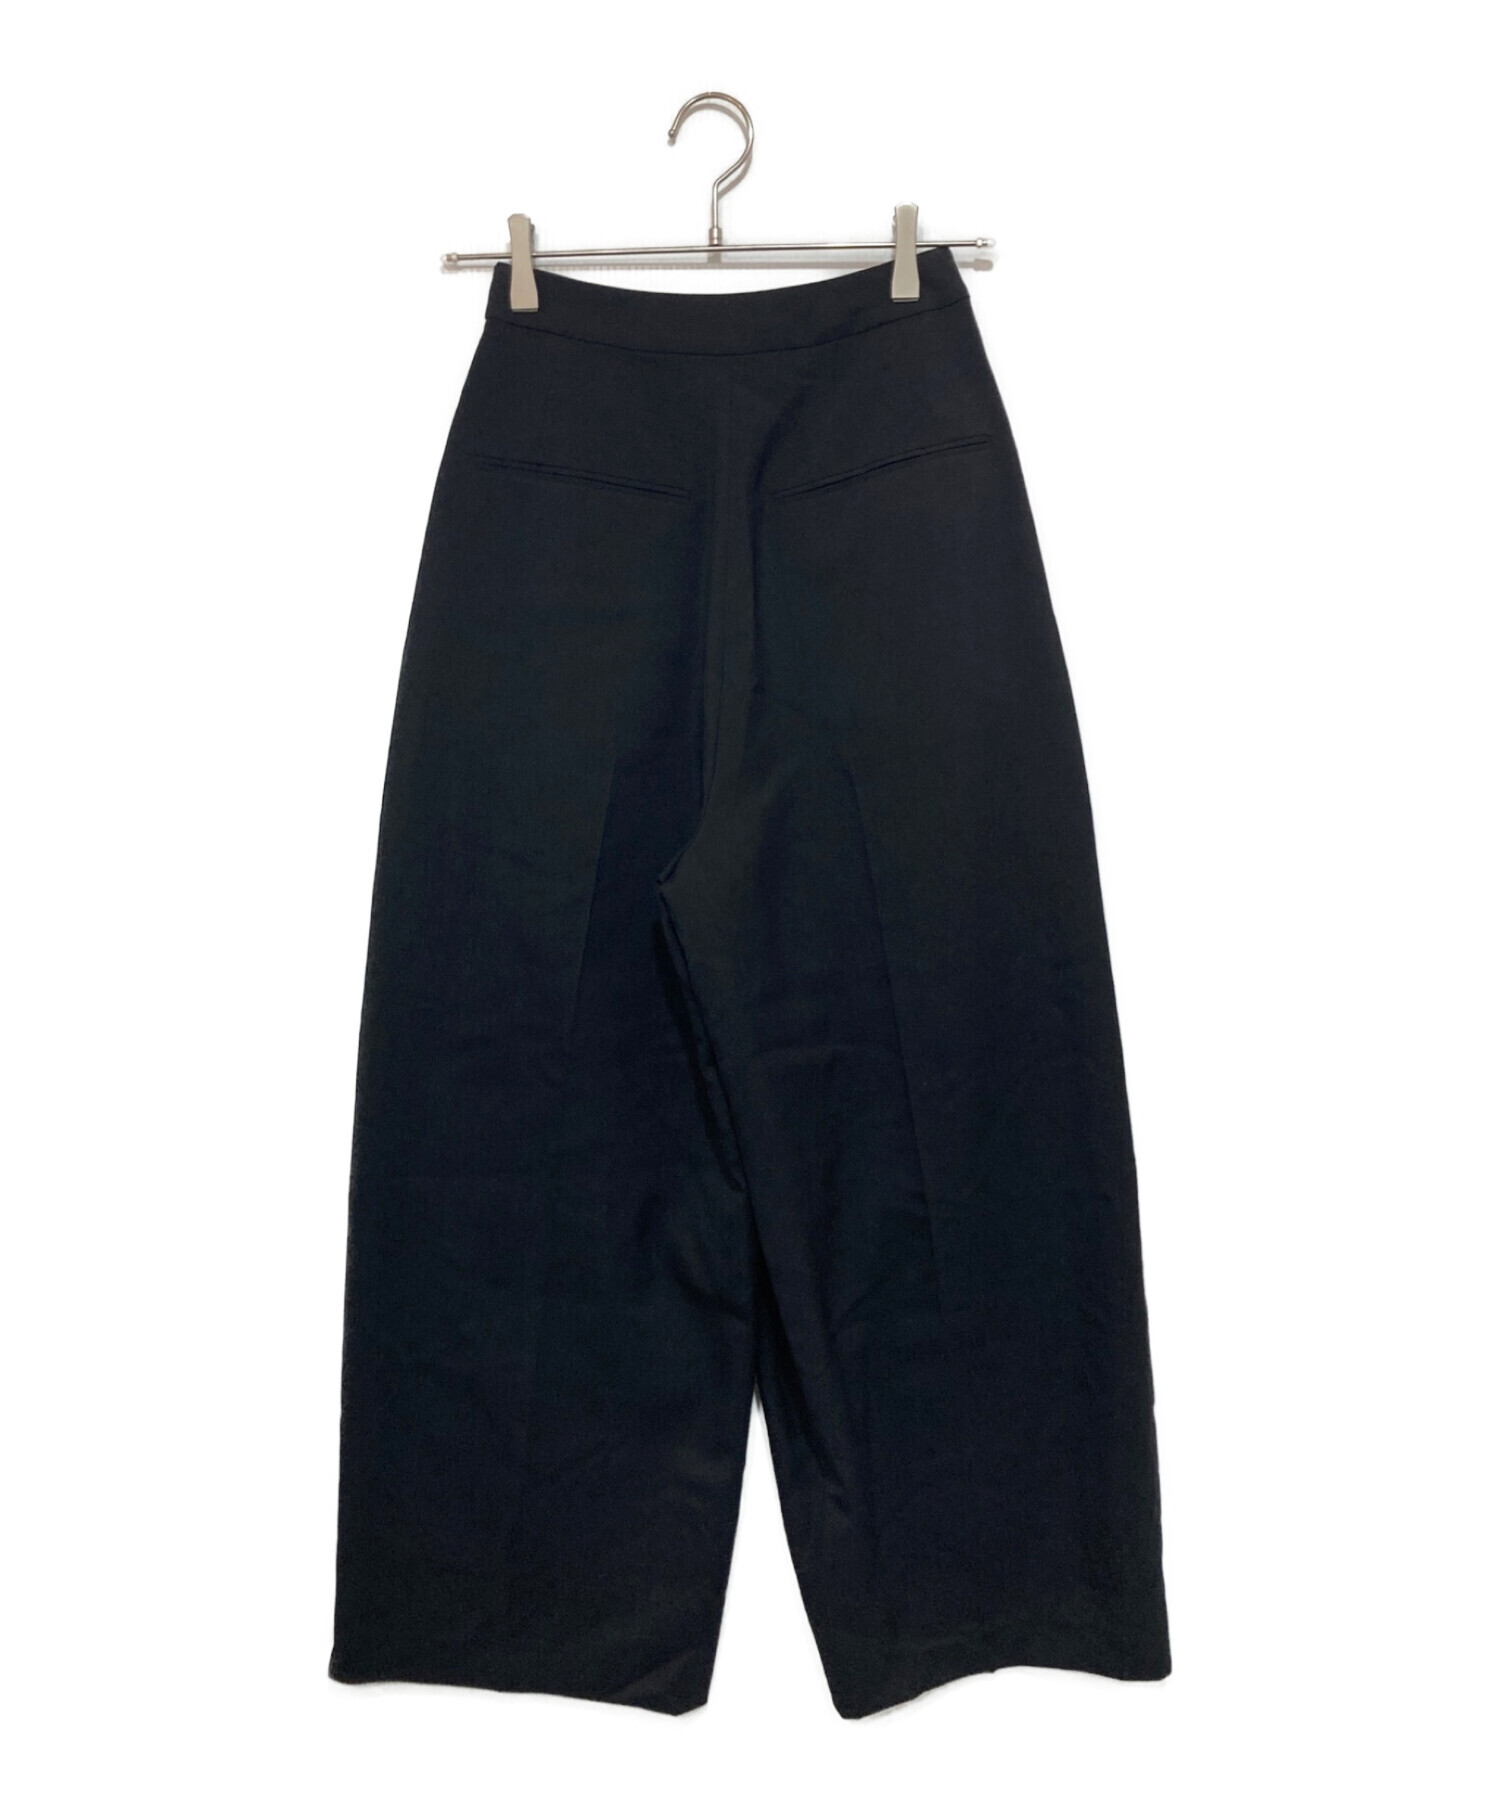 IIROT (イロット) Wool Cross Pants ブラック サイズ:36